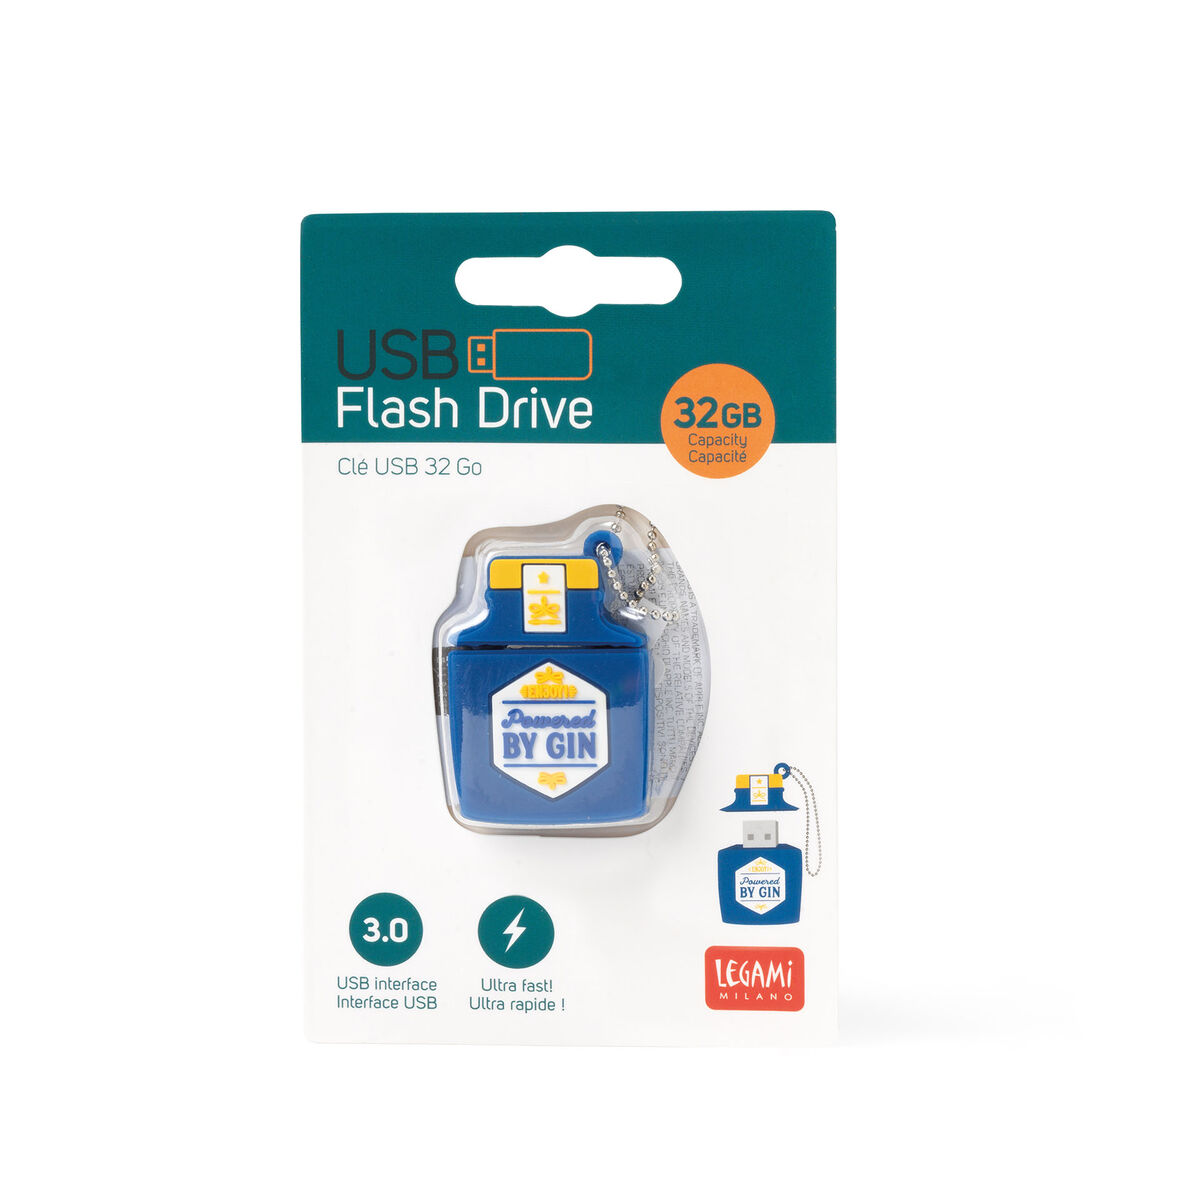 32 GB - USB 3.0 Flash Drive, , zoo